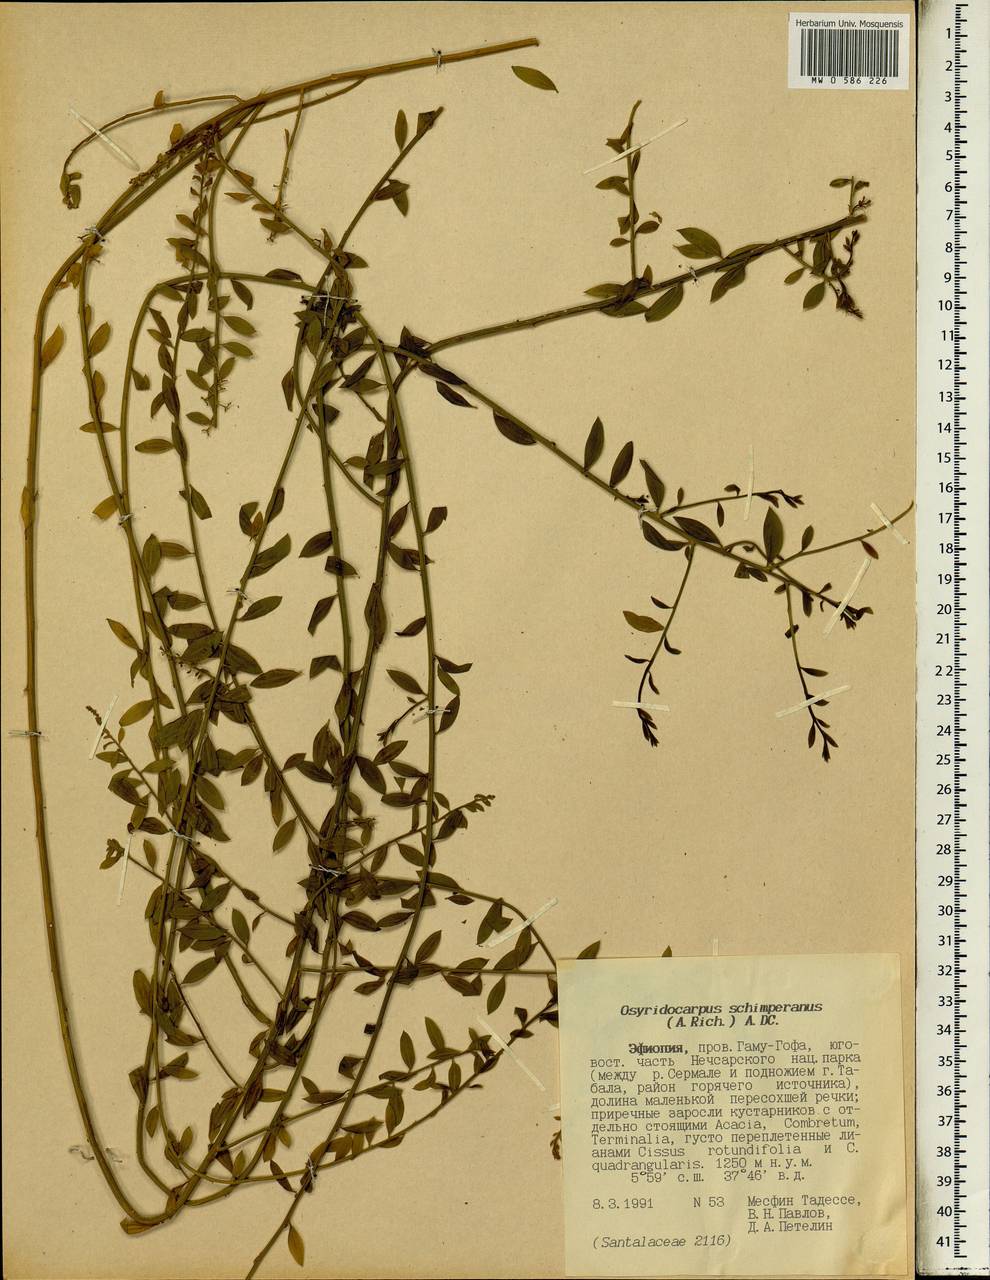 Osyridicarpos schimperianus (Hochst. ex A. Rich.) A. DC., Africa (AFR) (Ethiopia)